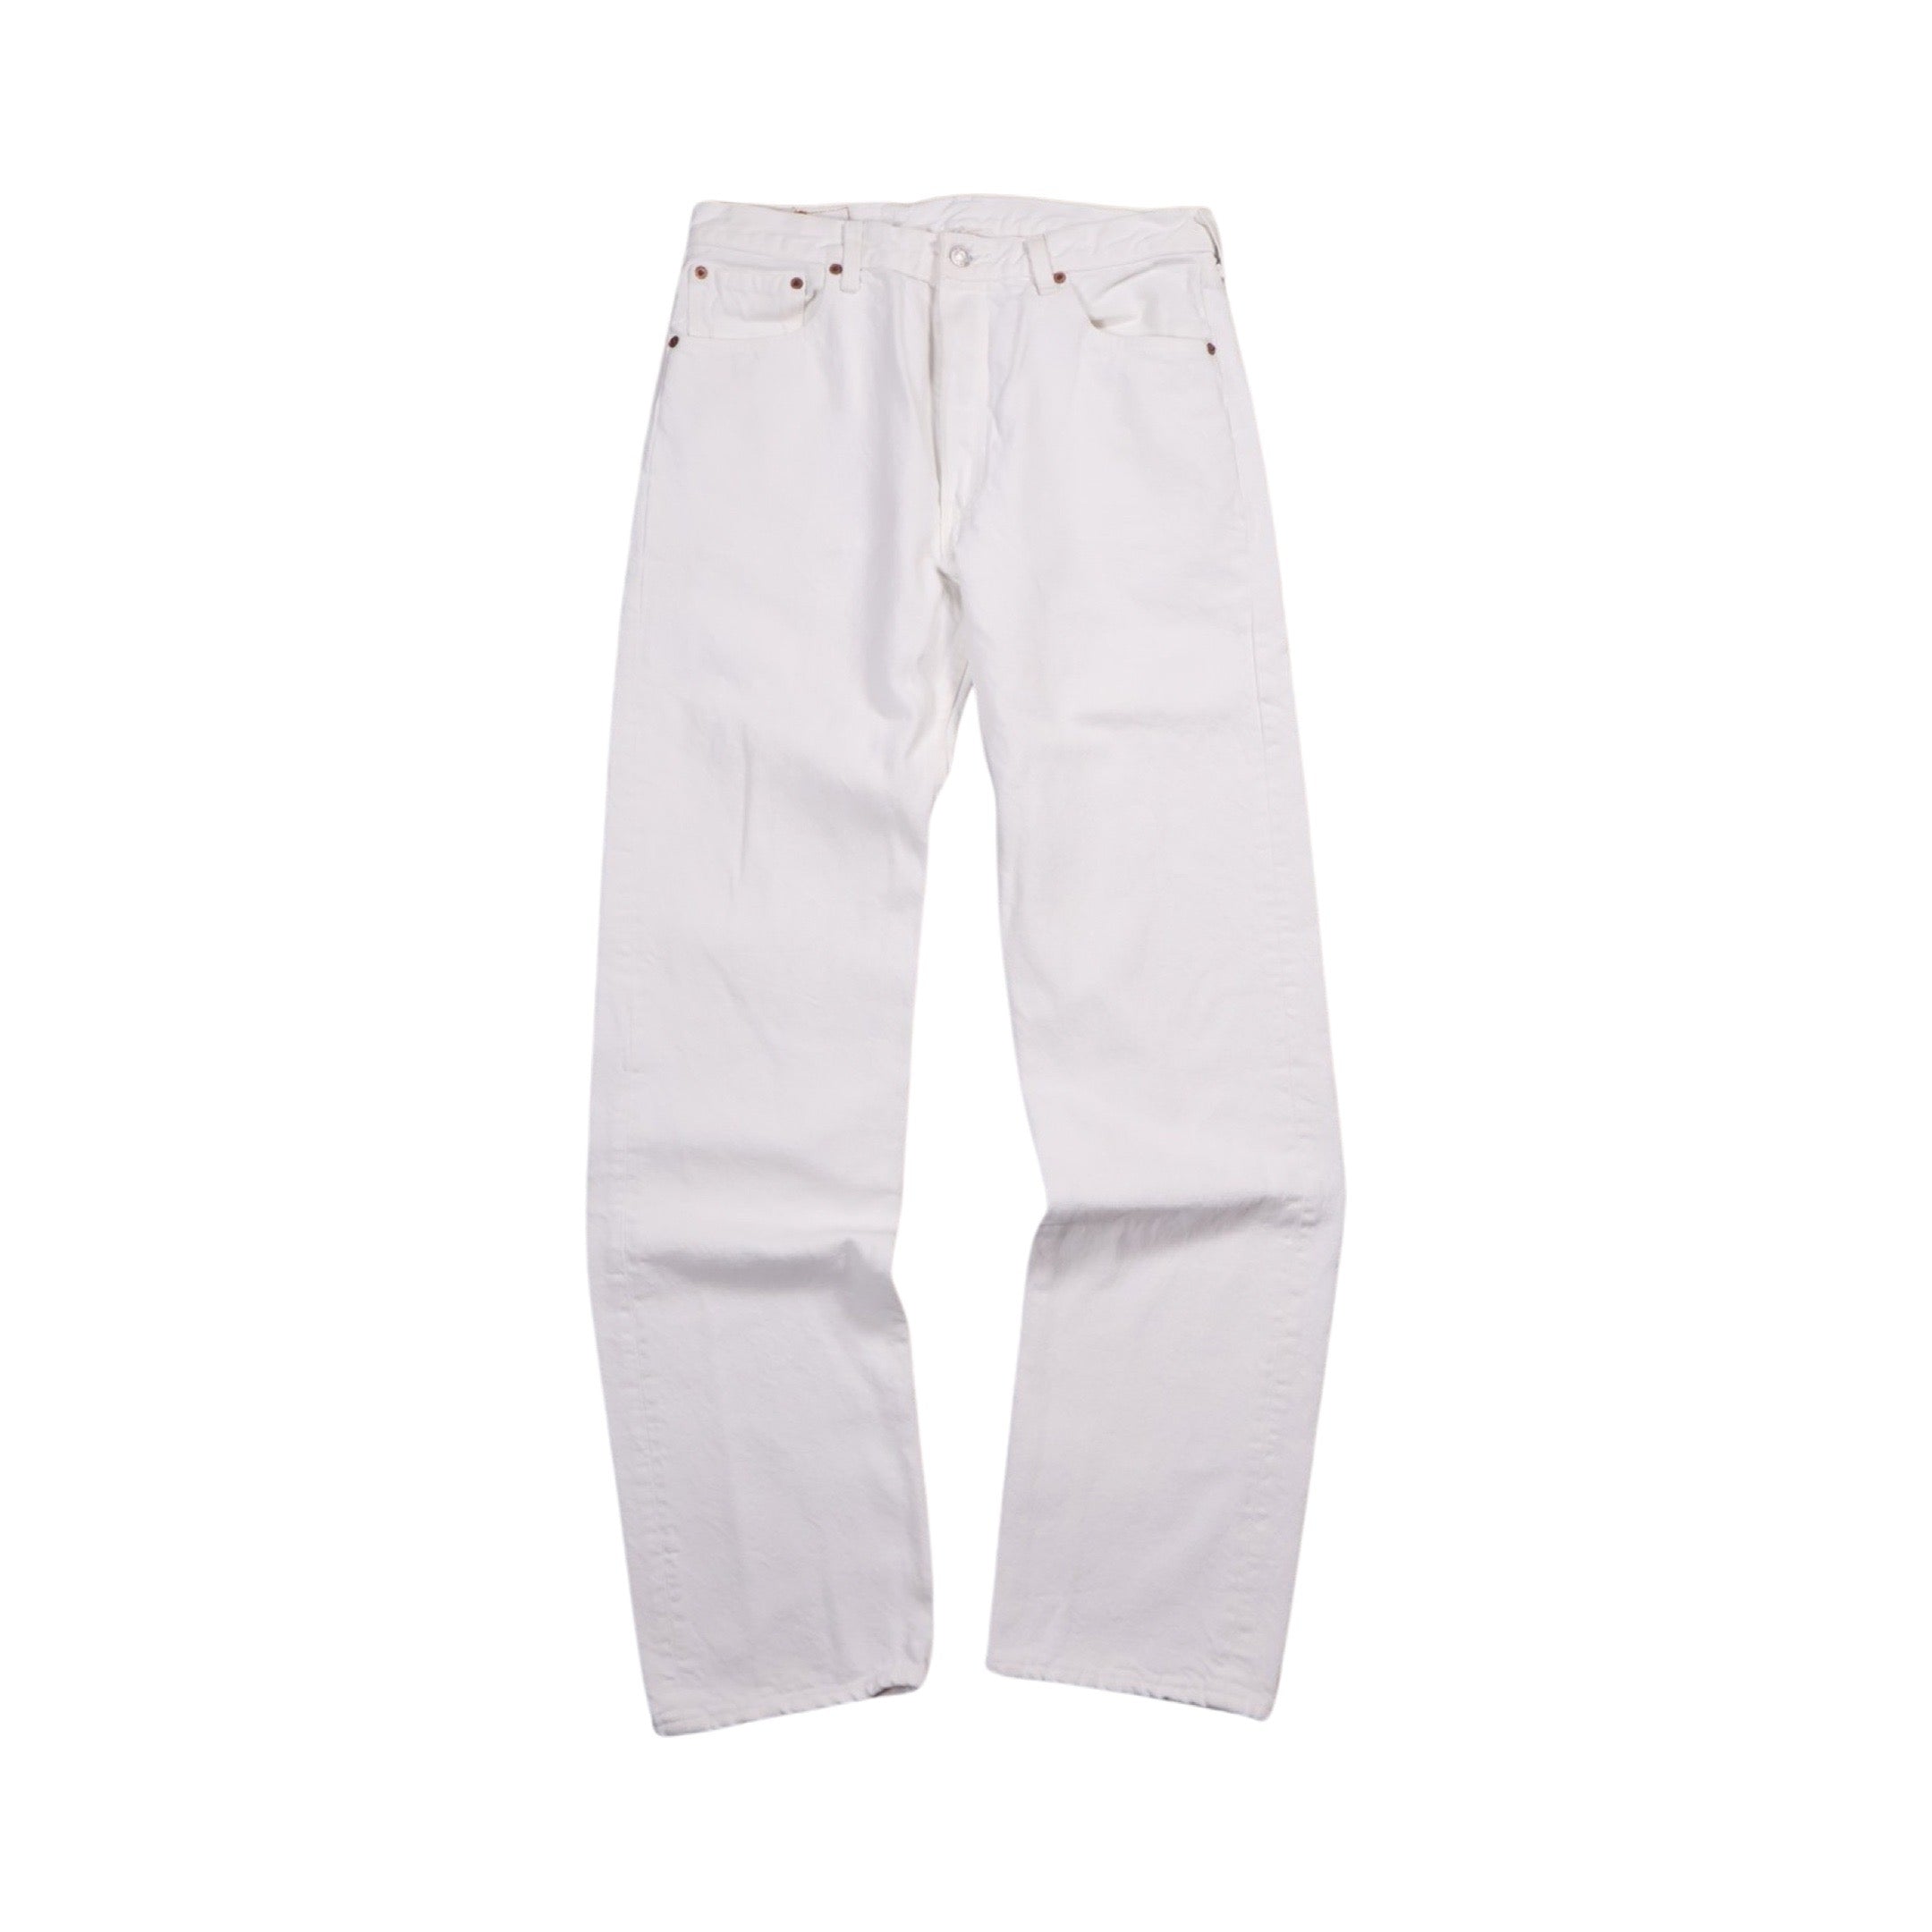 White Levi’s 501 Jeans 1995 (32”)